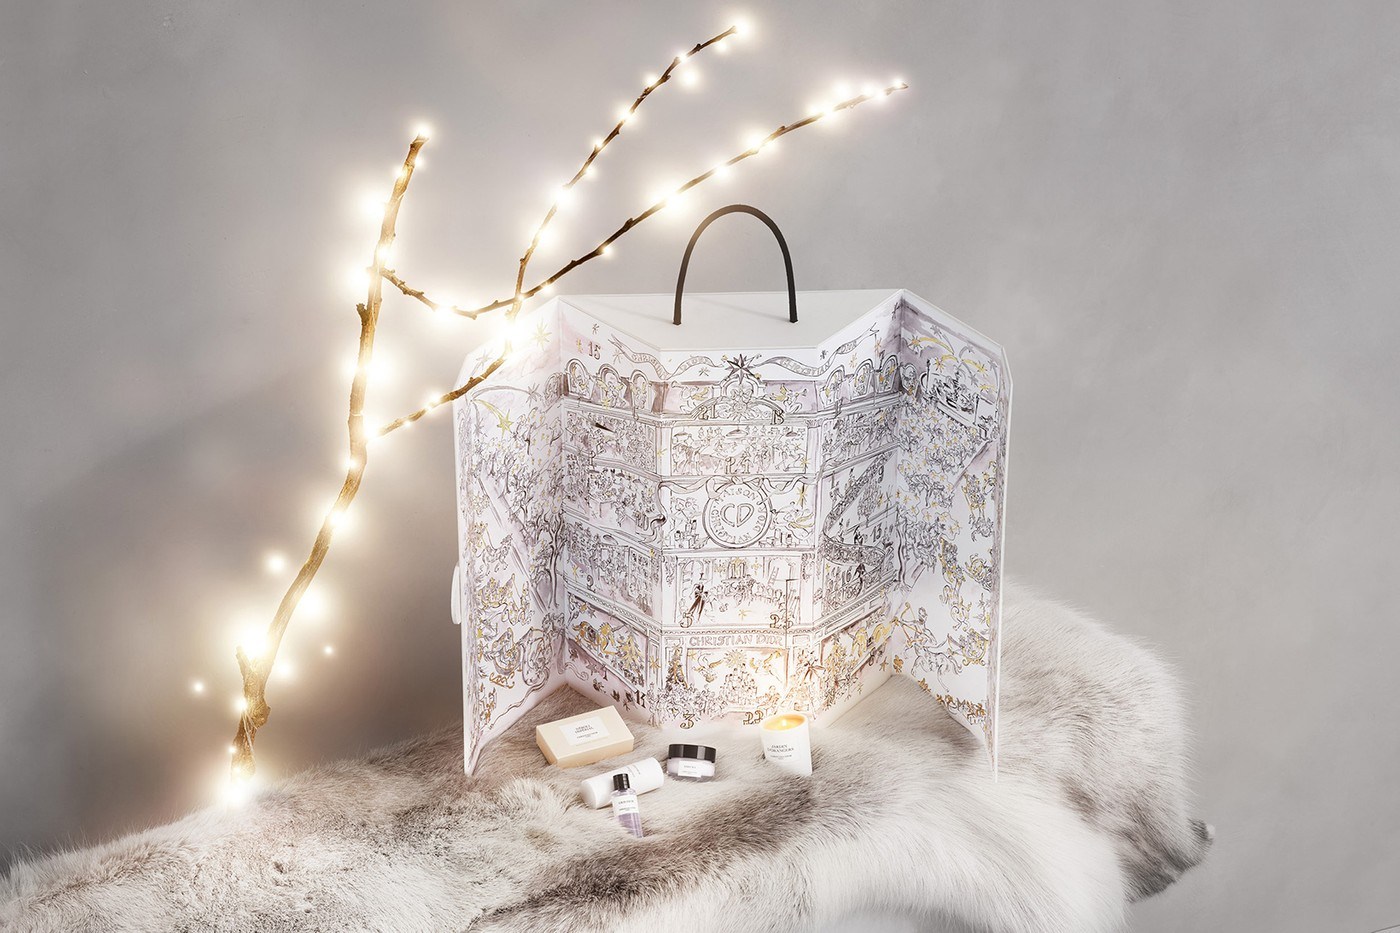 Maison Christian Dior 推出圣诞倒数月历及家居限定商品